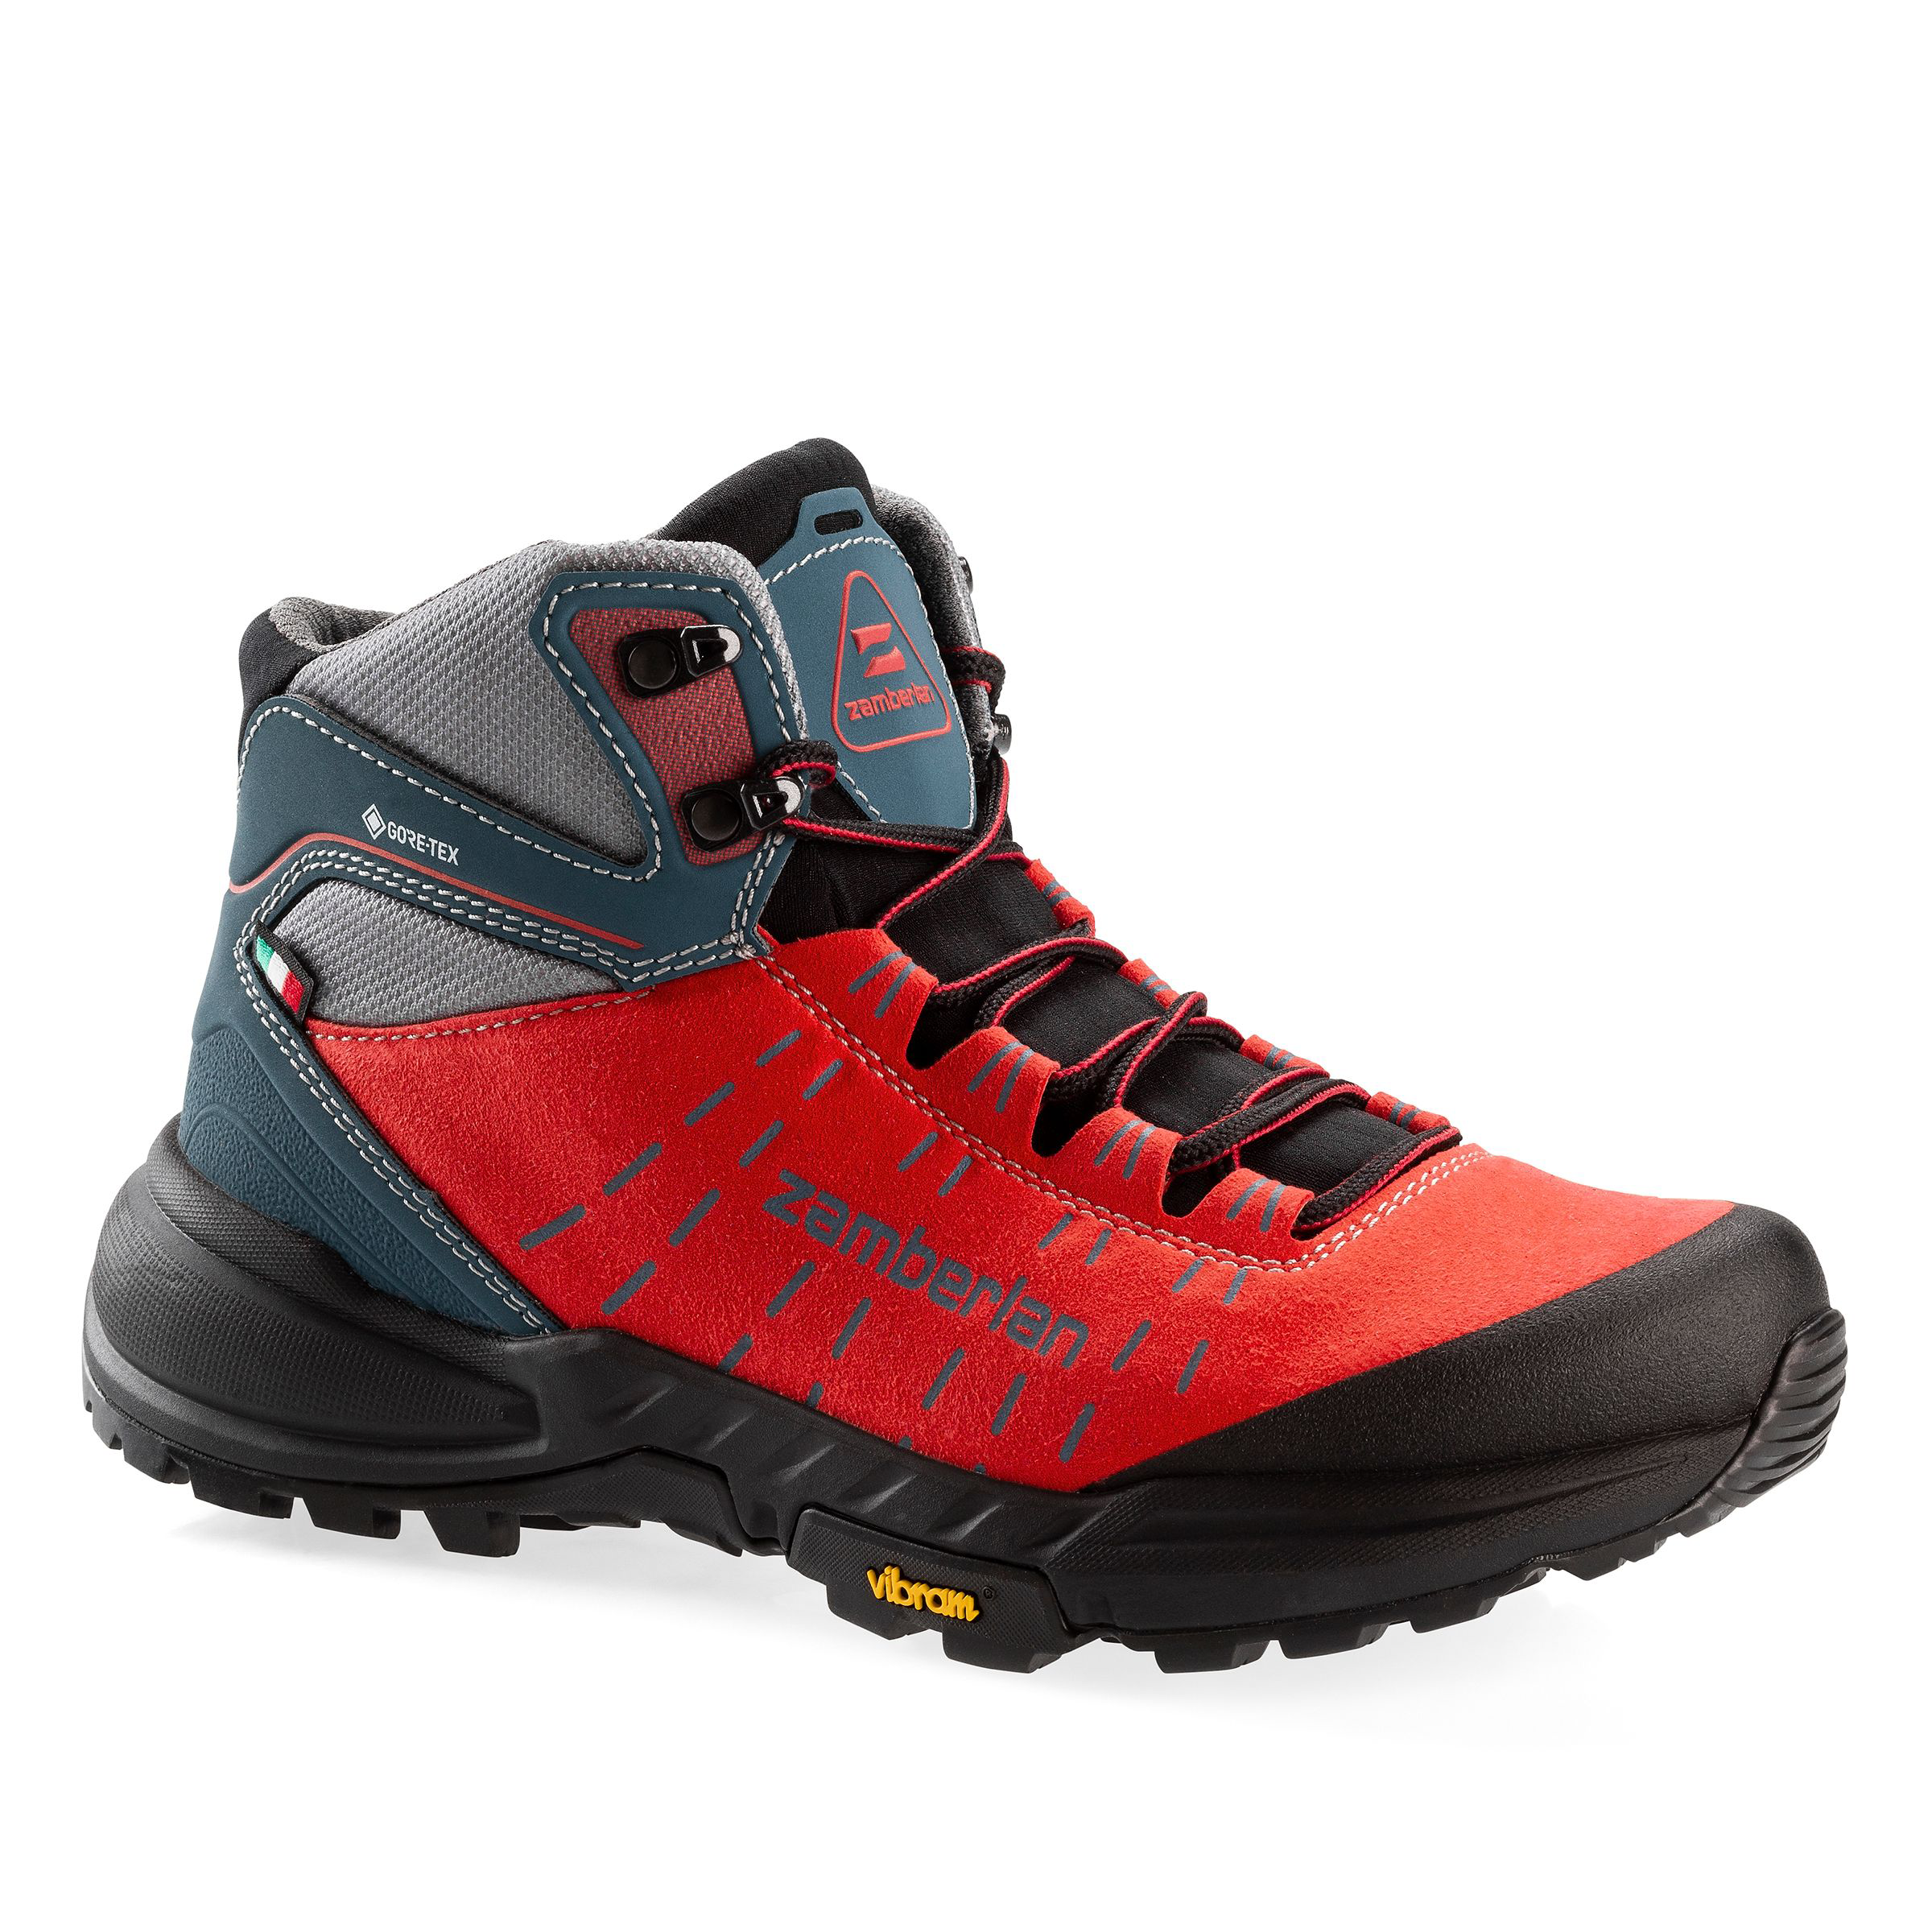 Zamberlan 334 Circe GTX Waterproof Hiking Boots for Ladies - Red - 6.5M